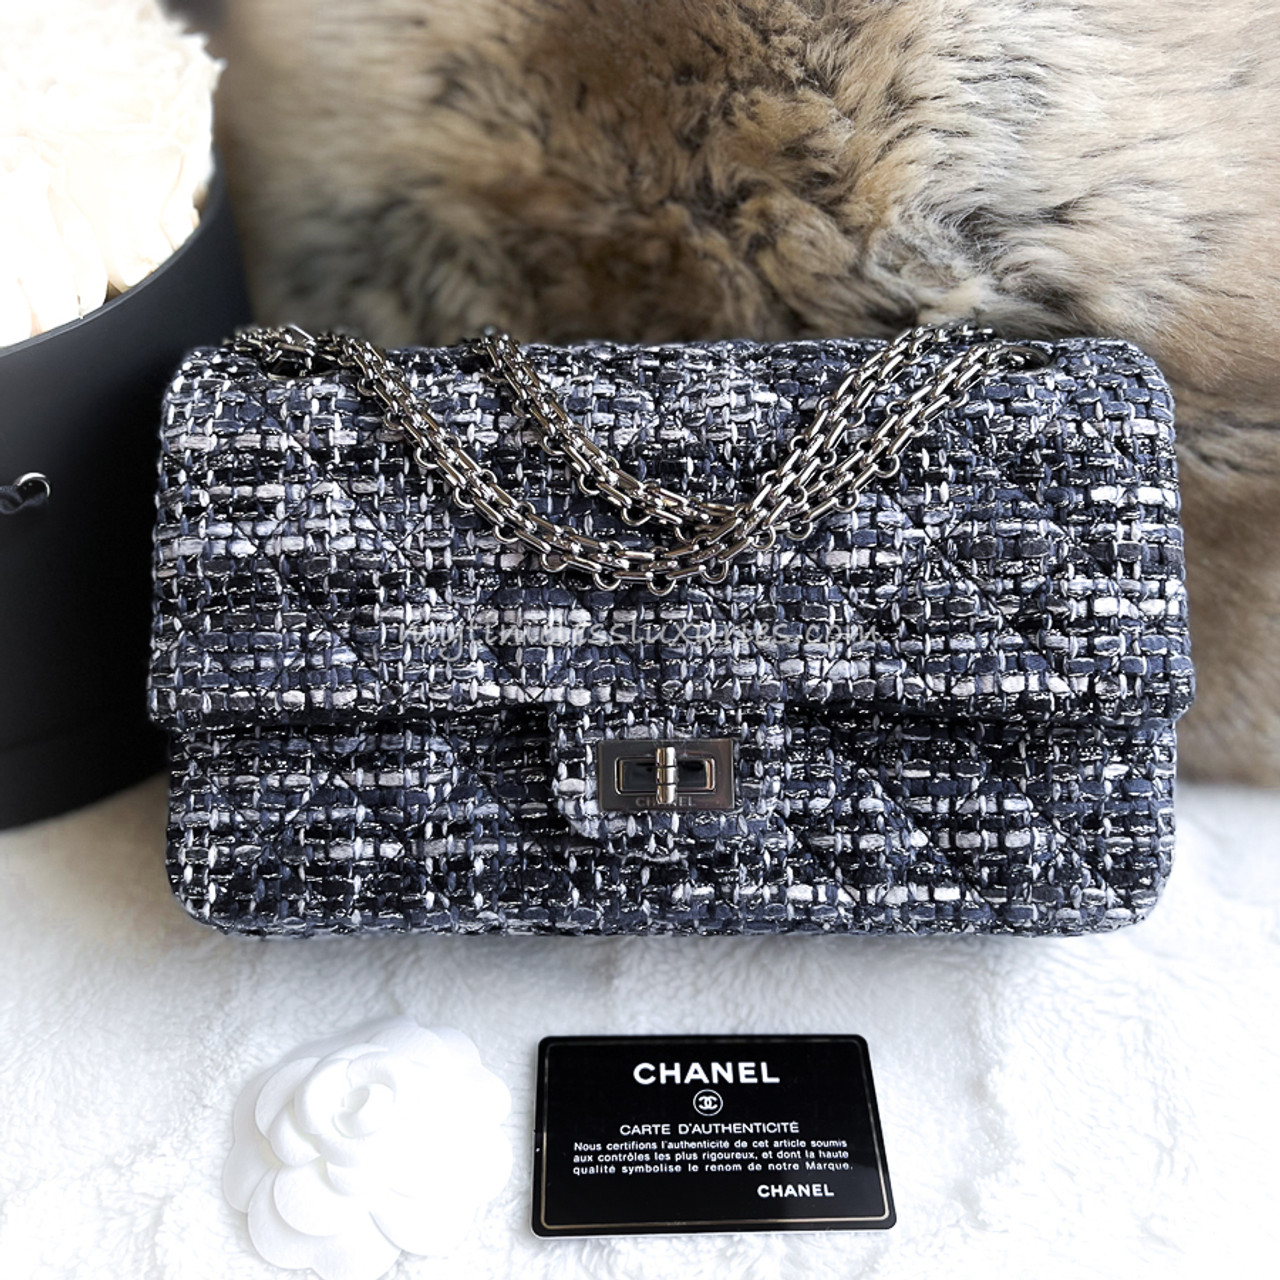 Chanel 255 Flap Bag  The 10 Iconic Bags Fashion Girls Would Kill to Own   POPSUGAR Fashion Photo 2